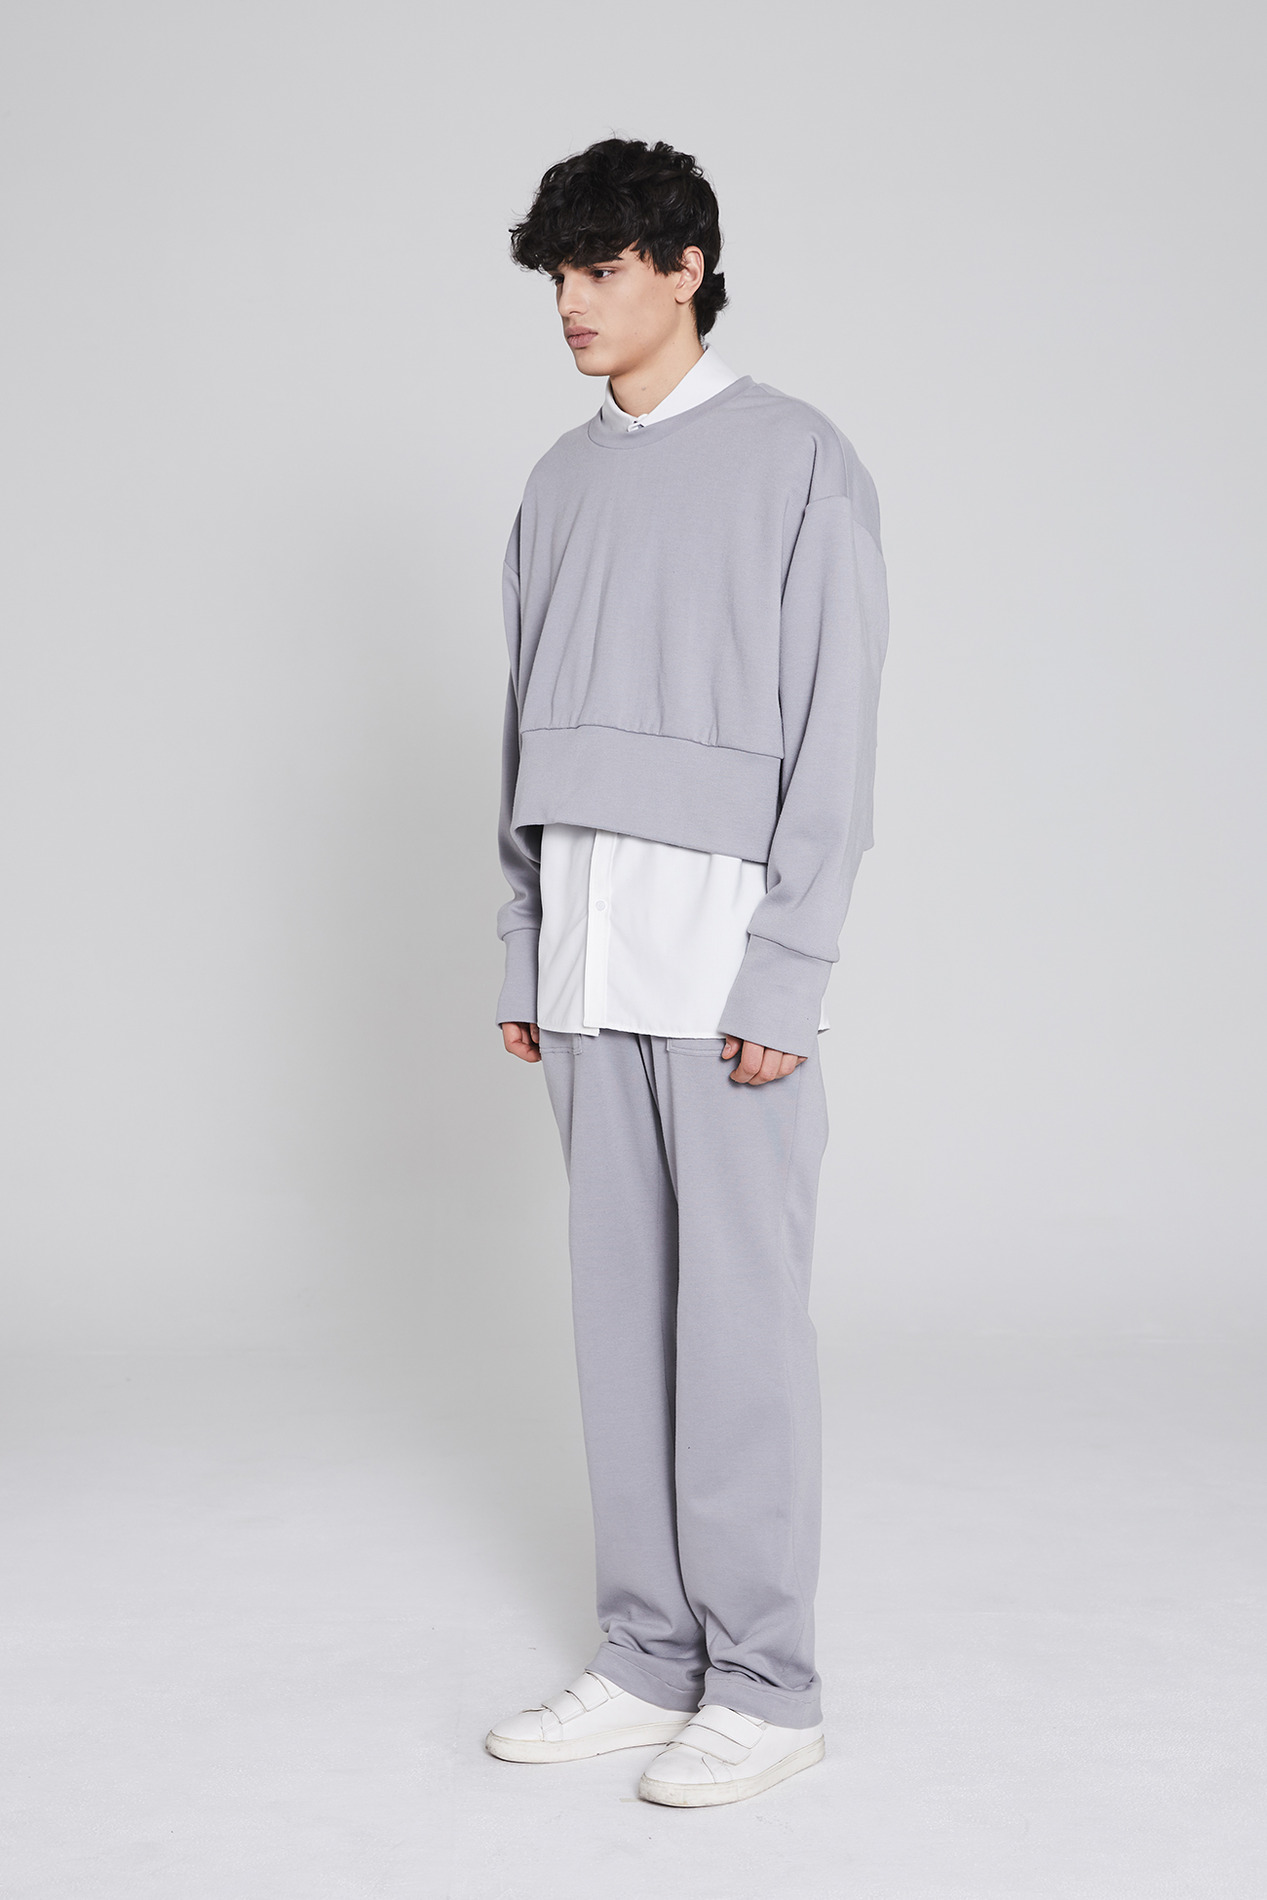 MILLIN Crop sweatshirt(gray)